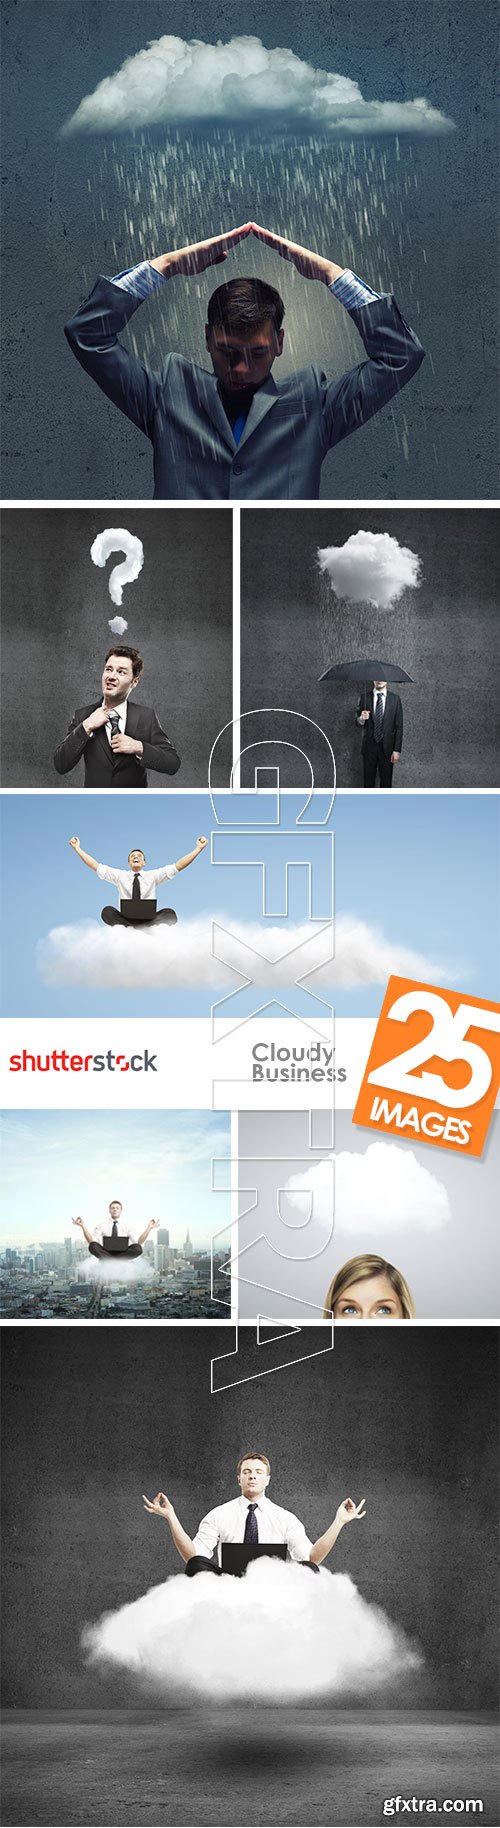 Cloudy Business 25xJPG